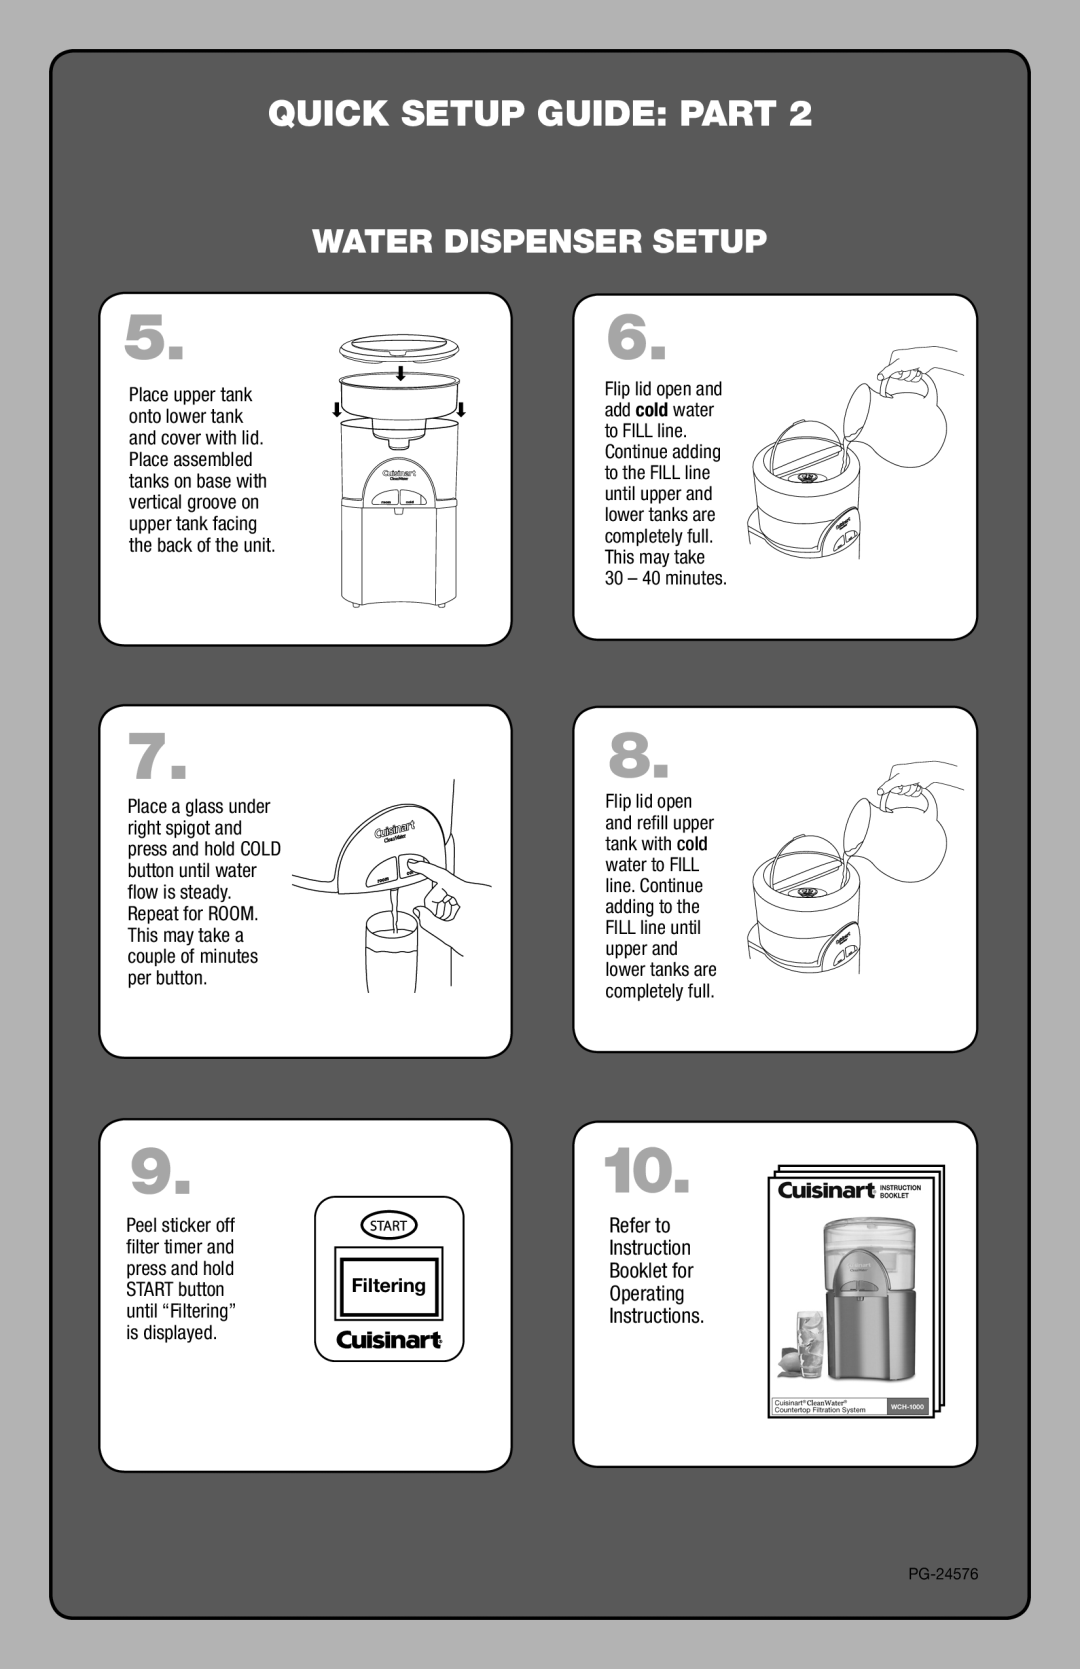 Cuisinart PG-24576 setup guide Quick Setup Guide Part, Water Dispenser Setup, Filtering 